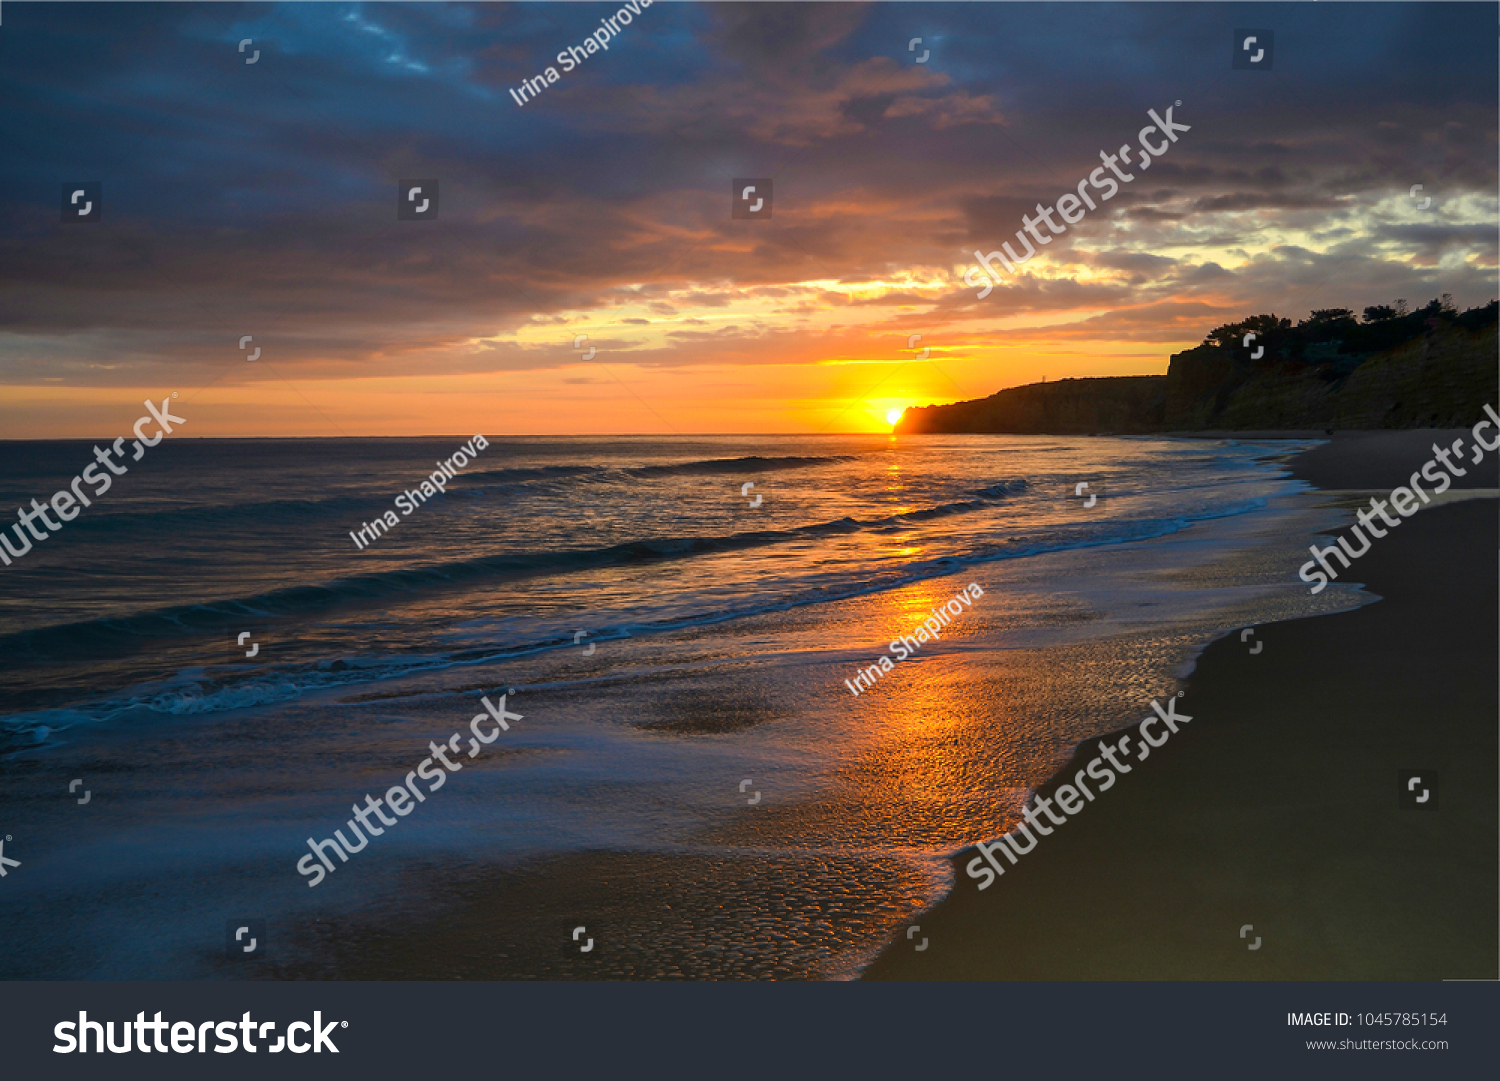 Sunset beach meditation landscape. Beach at sunset #1045785154